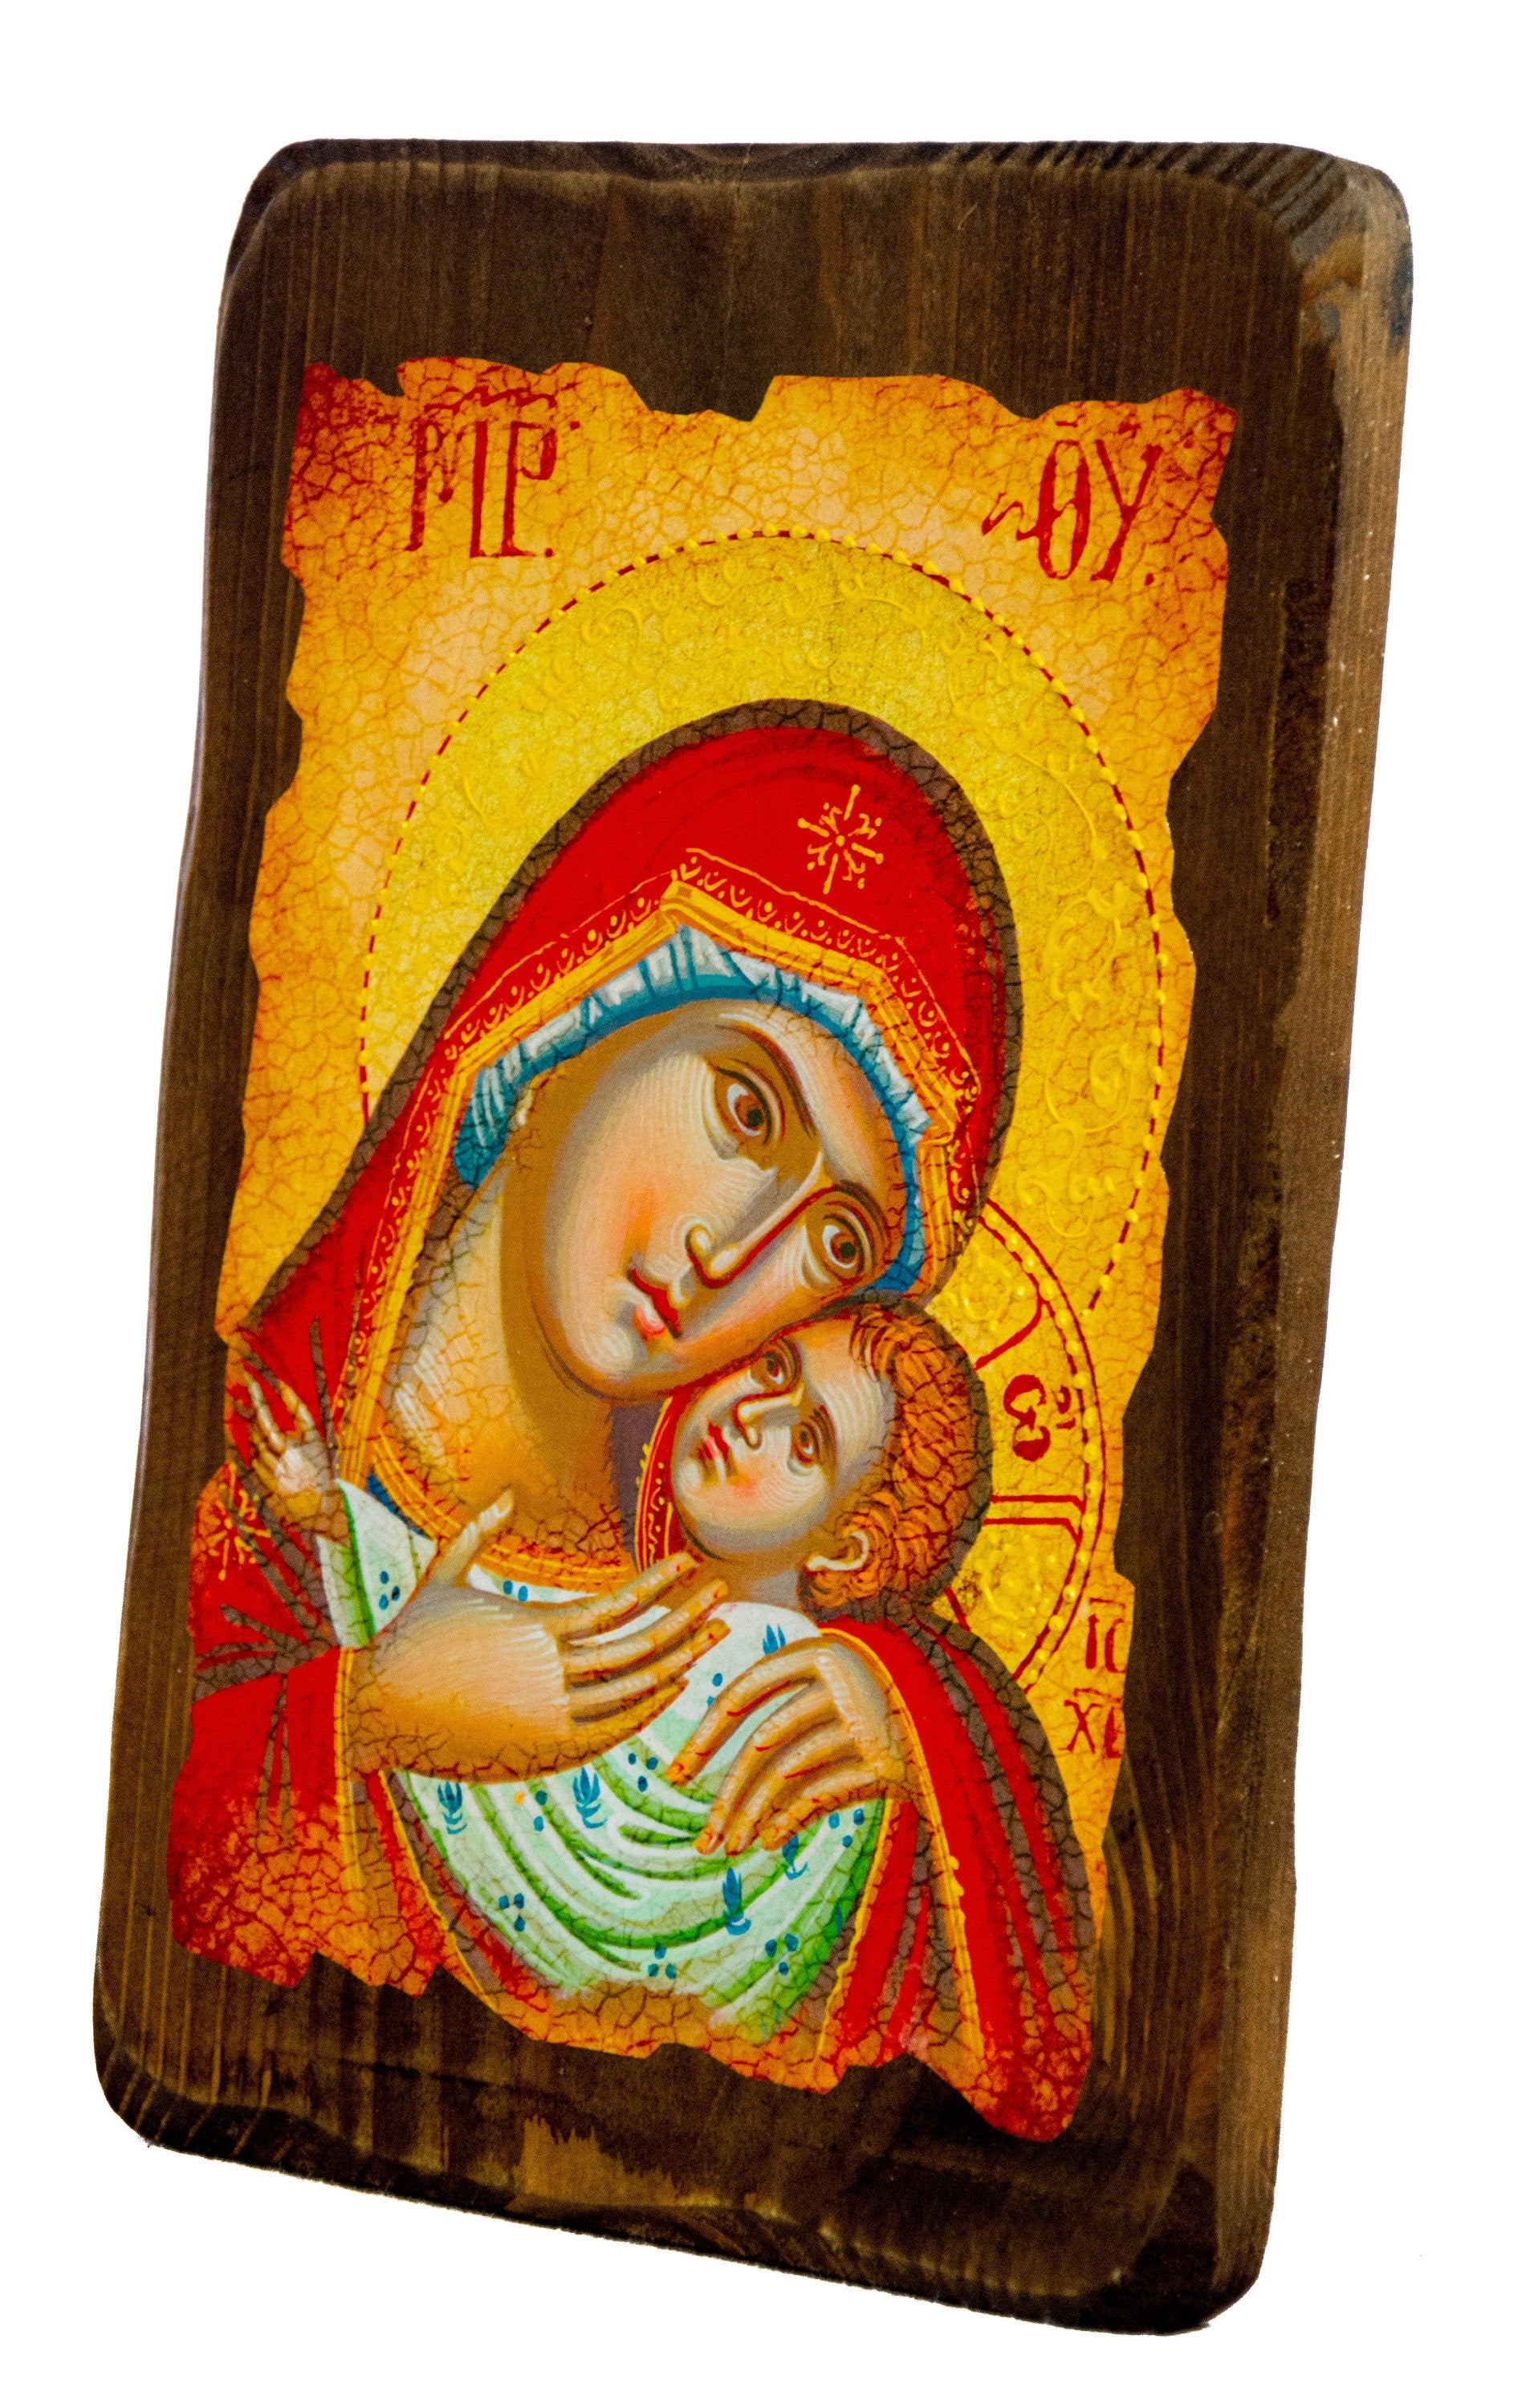 Virgin Mary icon Panagia Glykophilousa, Handmade Greek Orthodox Icon, Mother of God Byzantine art of Theotokos wall hanging wood plaque TheHolyArt